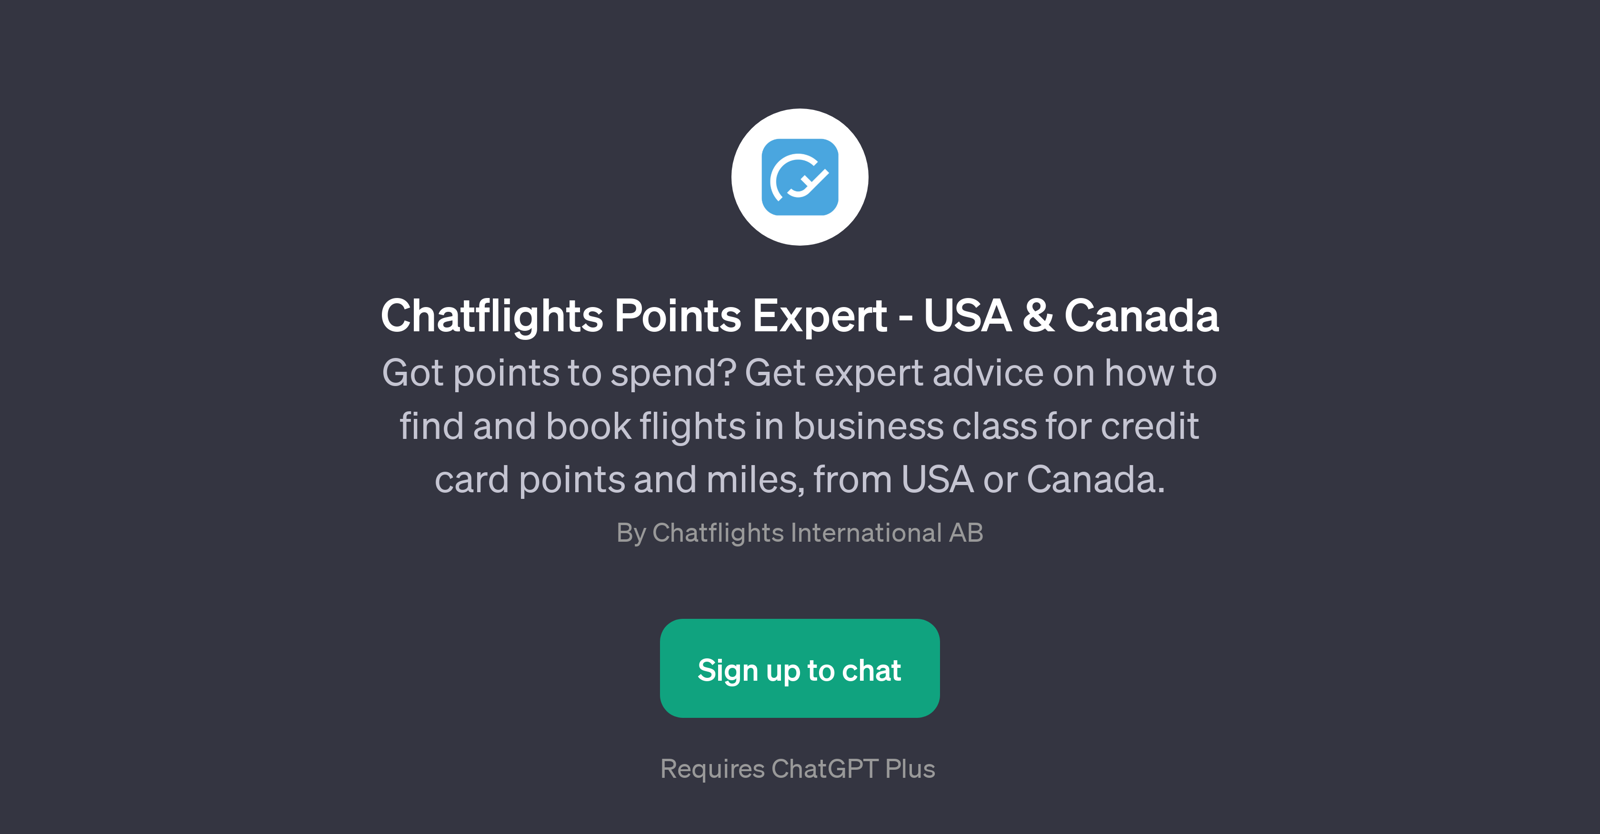 Chatflights Points Expert - USA & Canada website